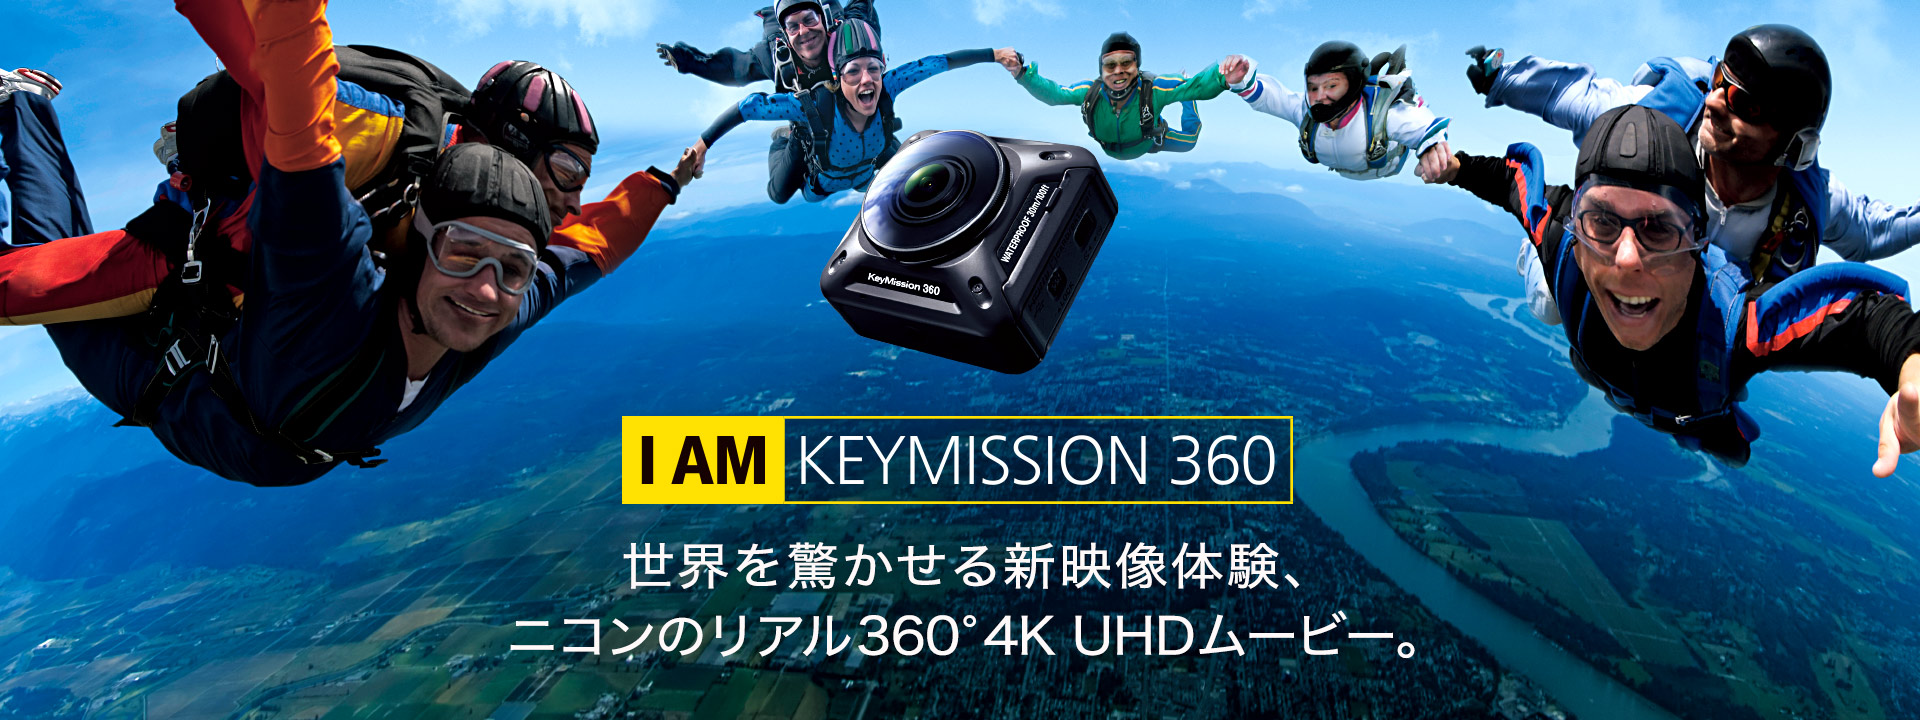 KeyMission 360 - 概要 | アクションカメラ | ニコンイメージング